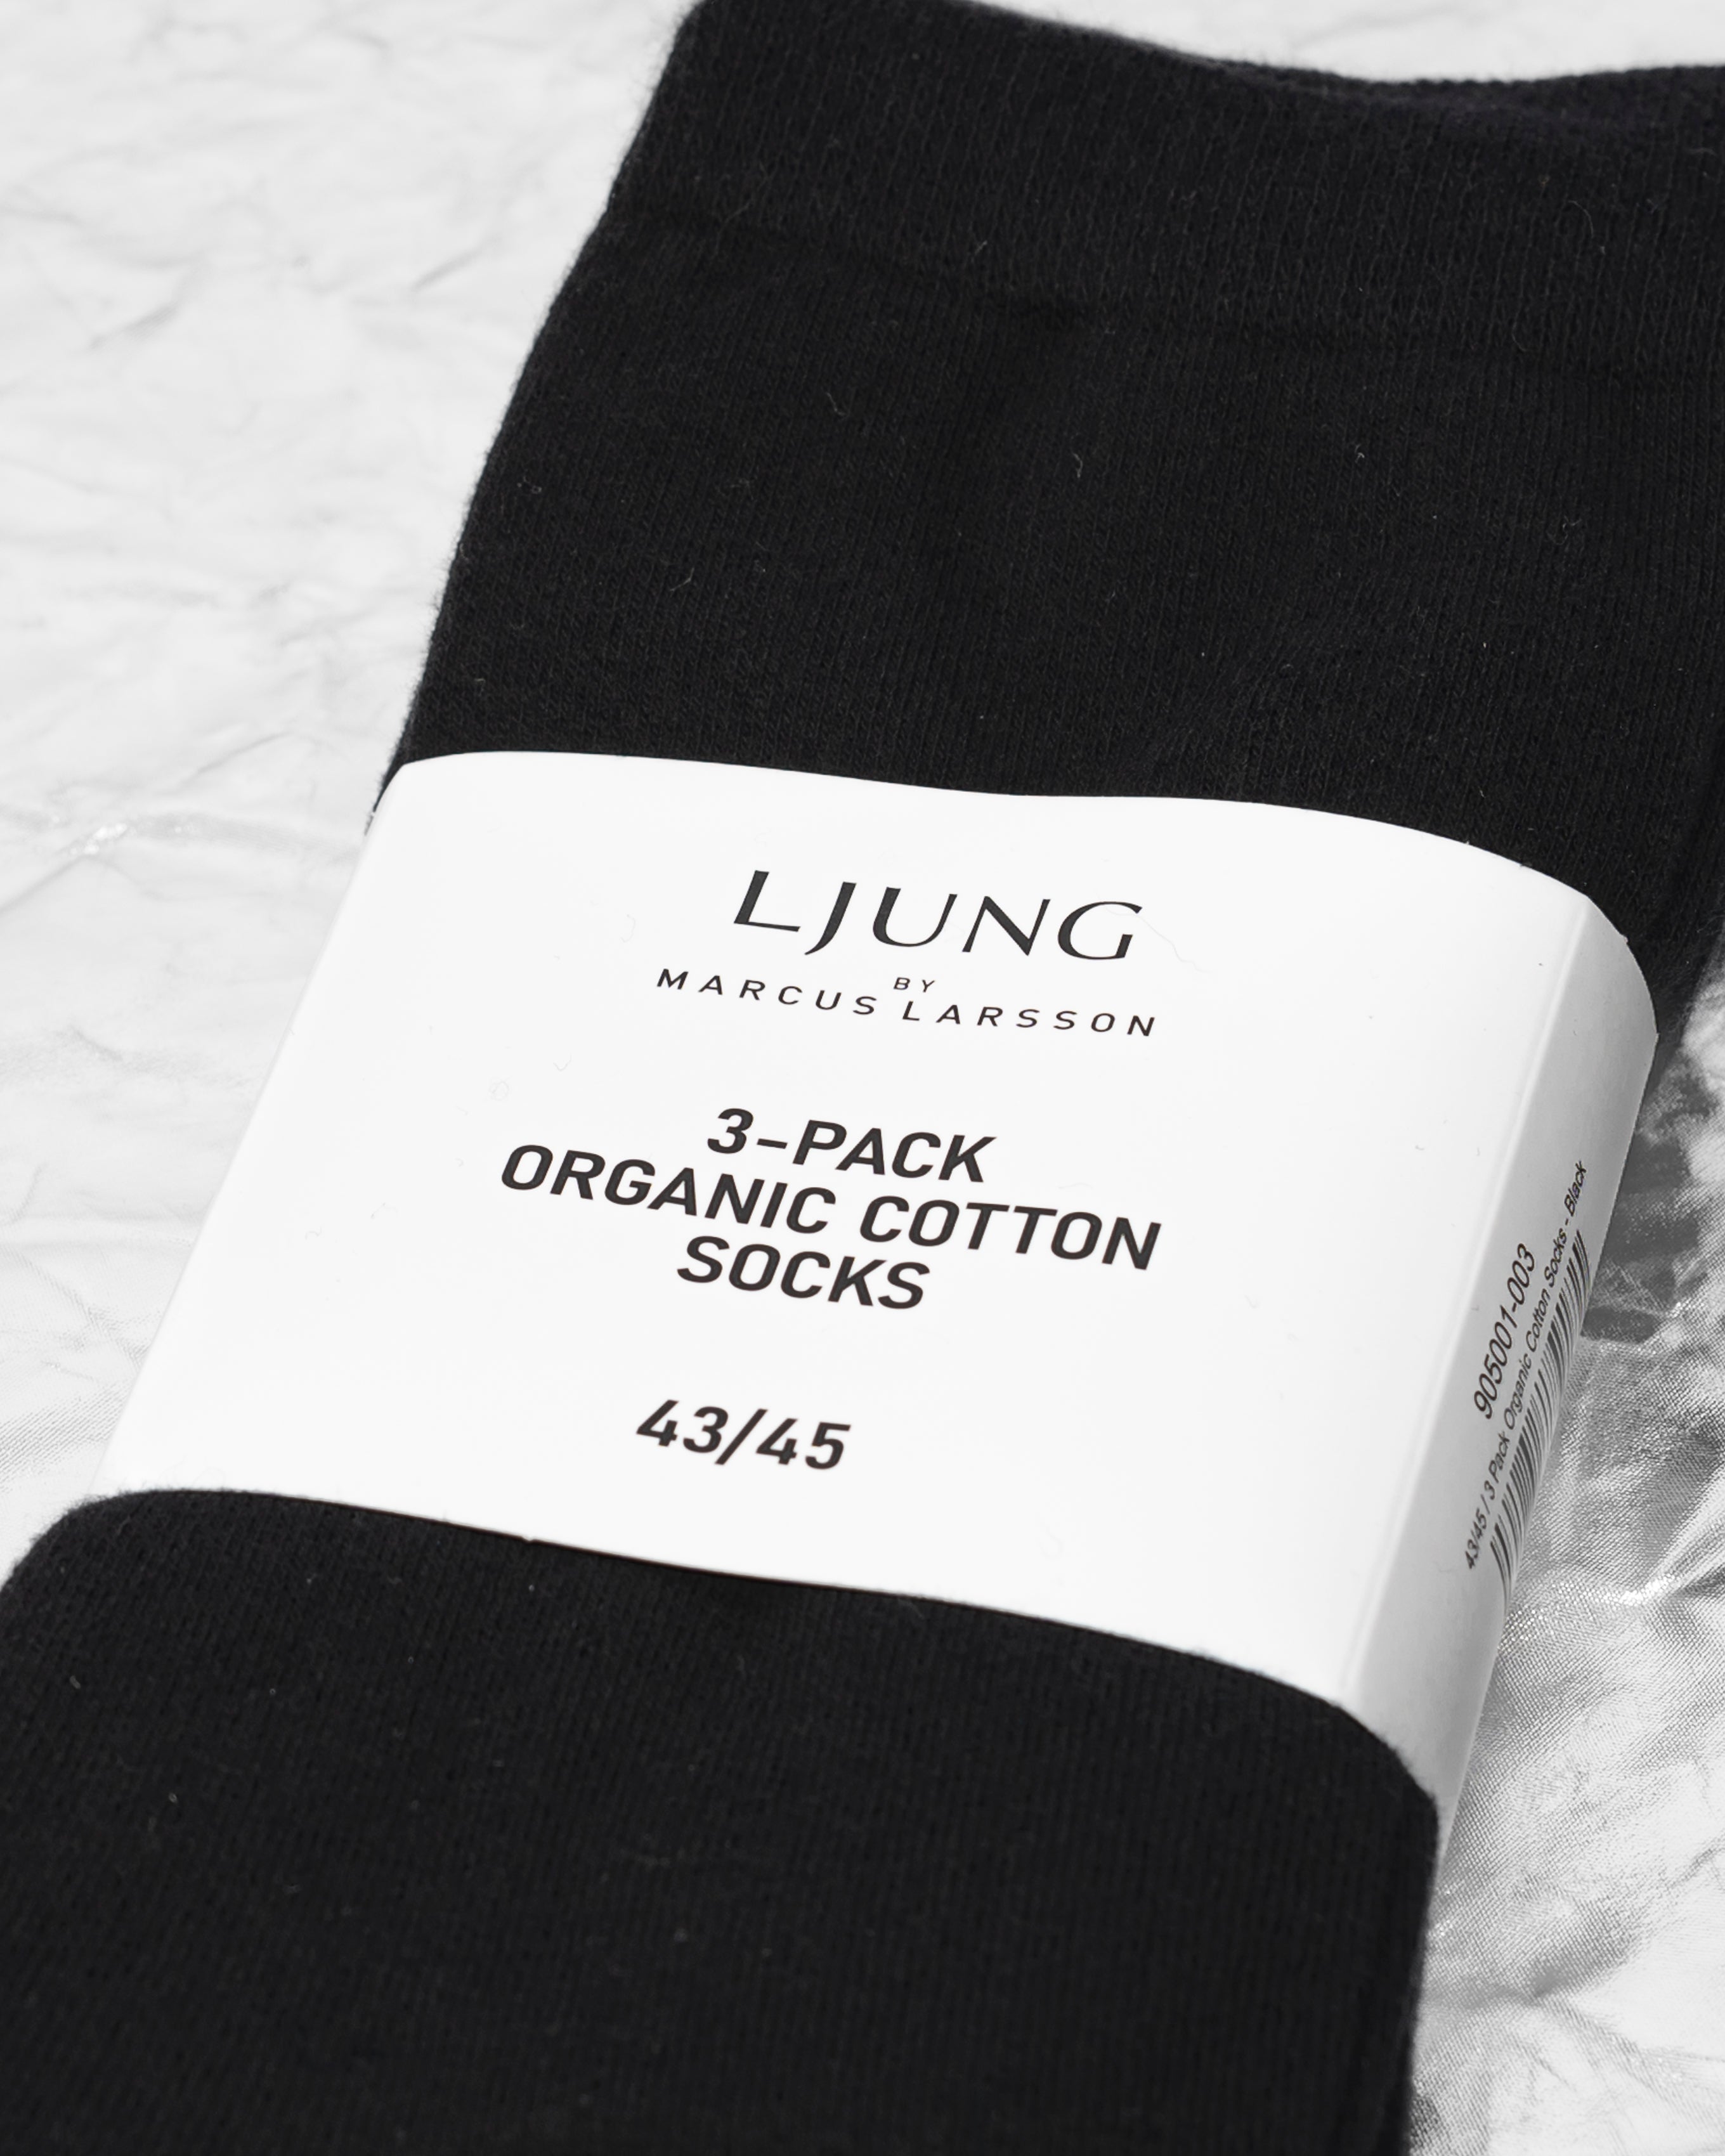 3 Pack Organic Cotton Socks - Black-Ljung by Marcus Larsson